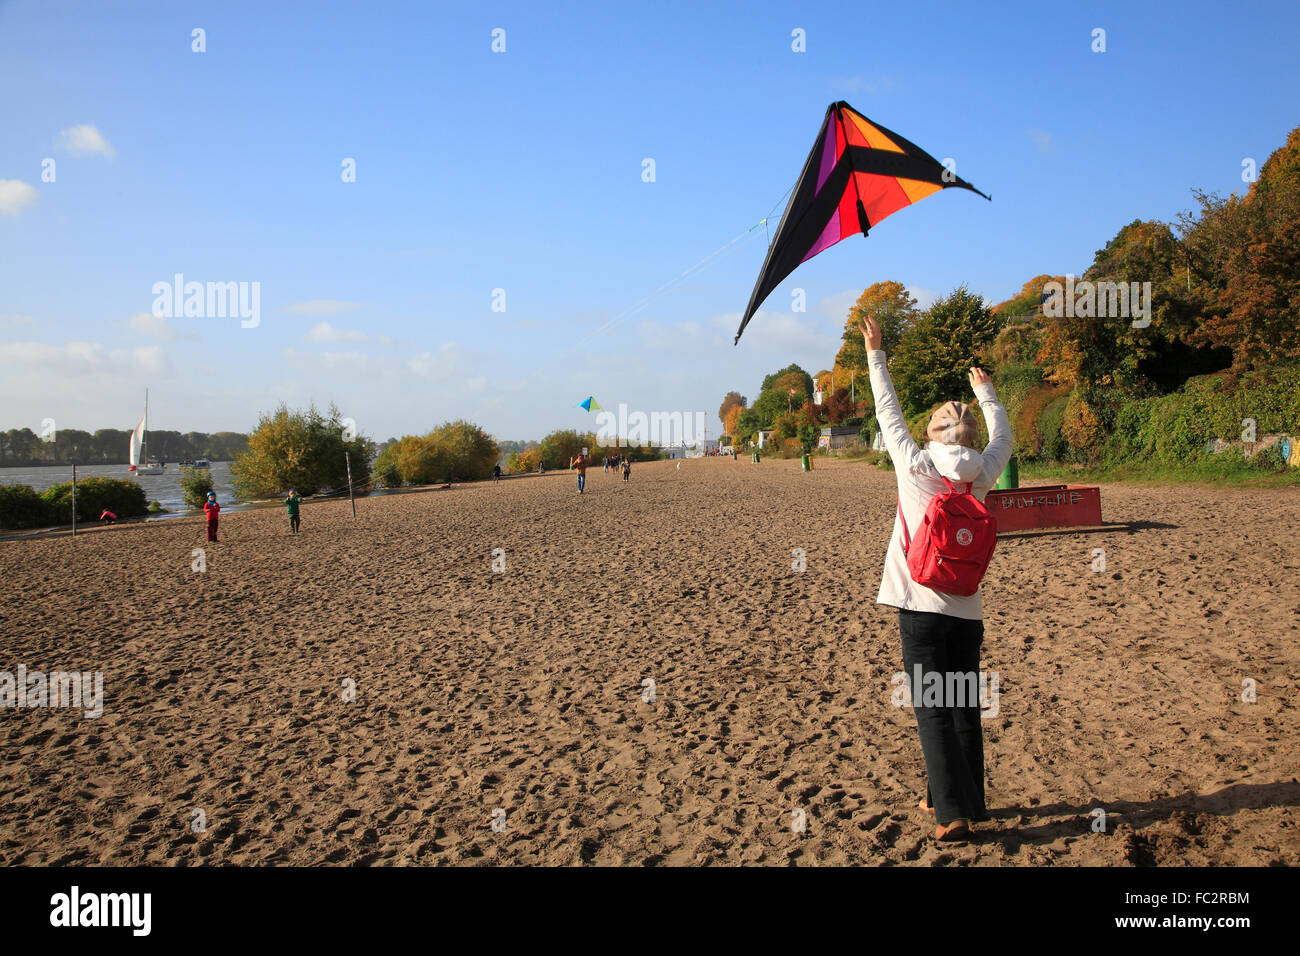 Kiteing at Elbe river beach near STRANDPERLE, Oevelgoenne, Hamburg, Germany, Europe Stock Photo